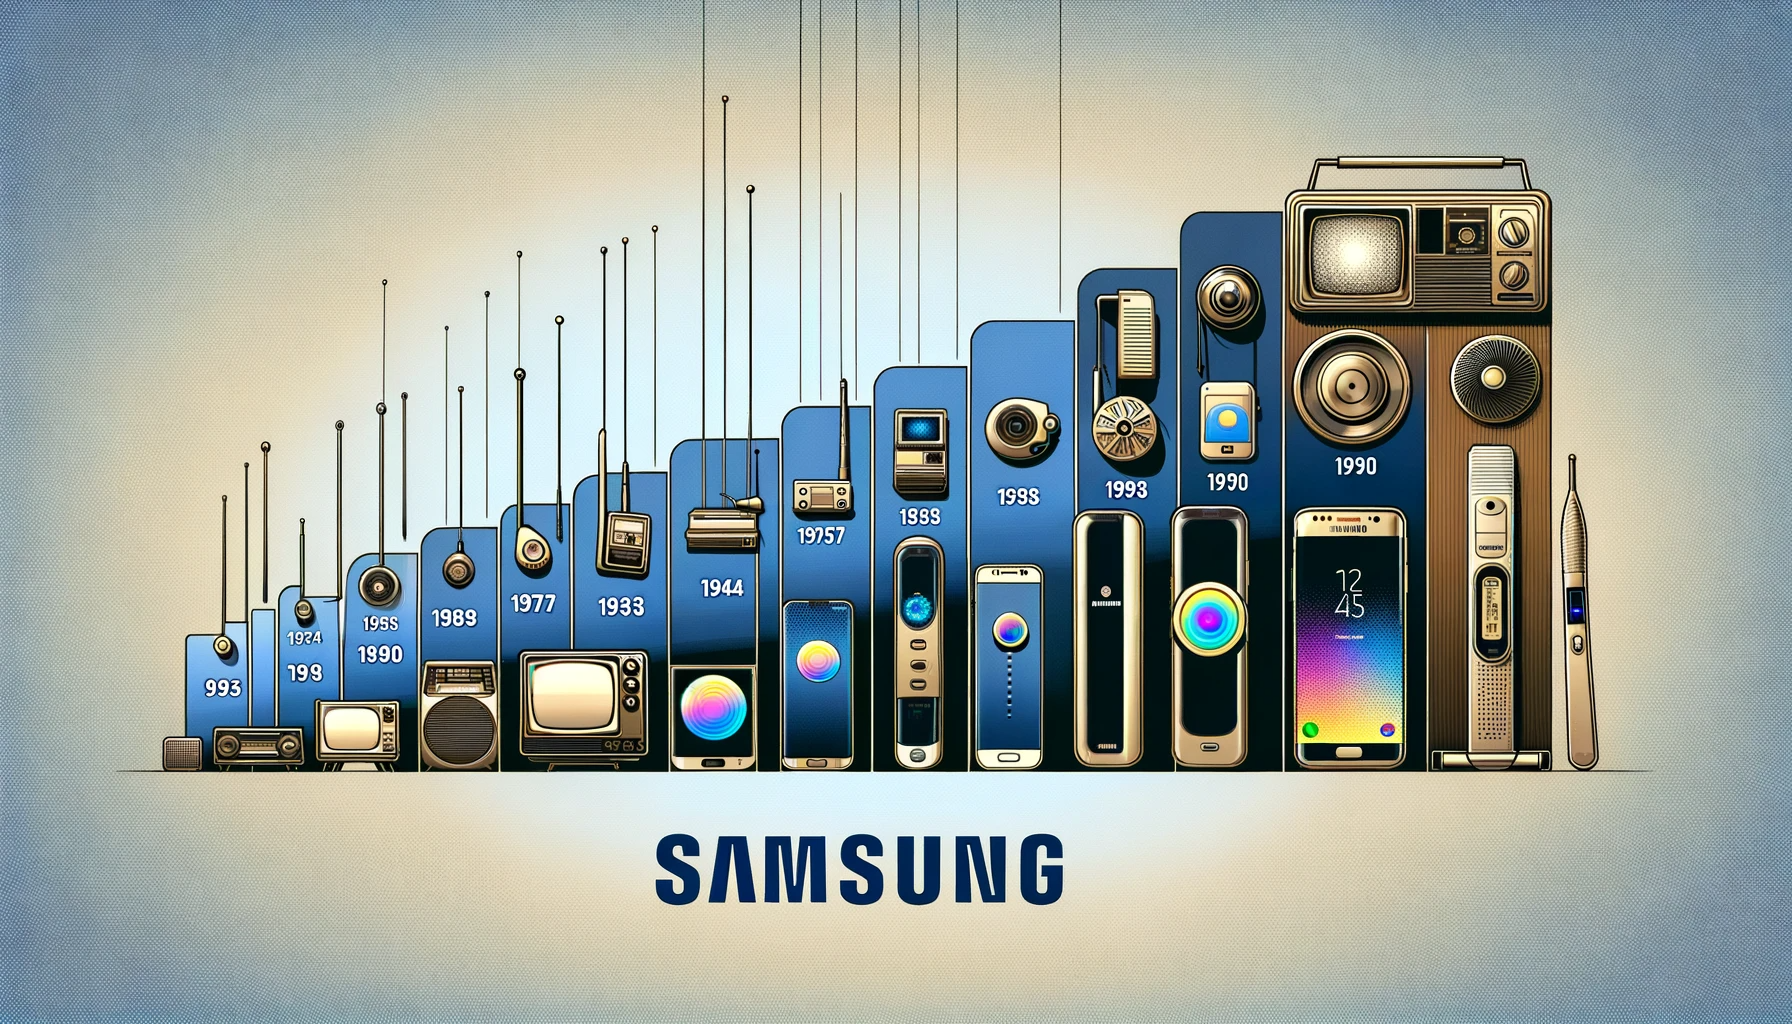 Samsung’s Evolution: A Journey of Innovation and Dominance